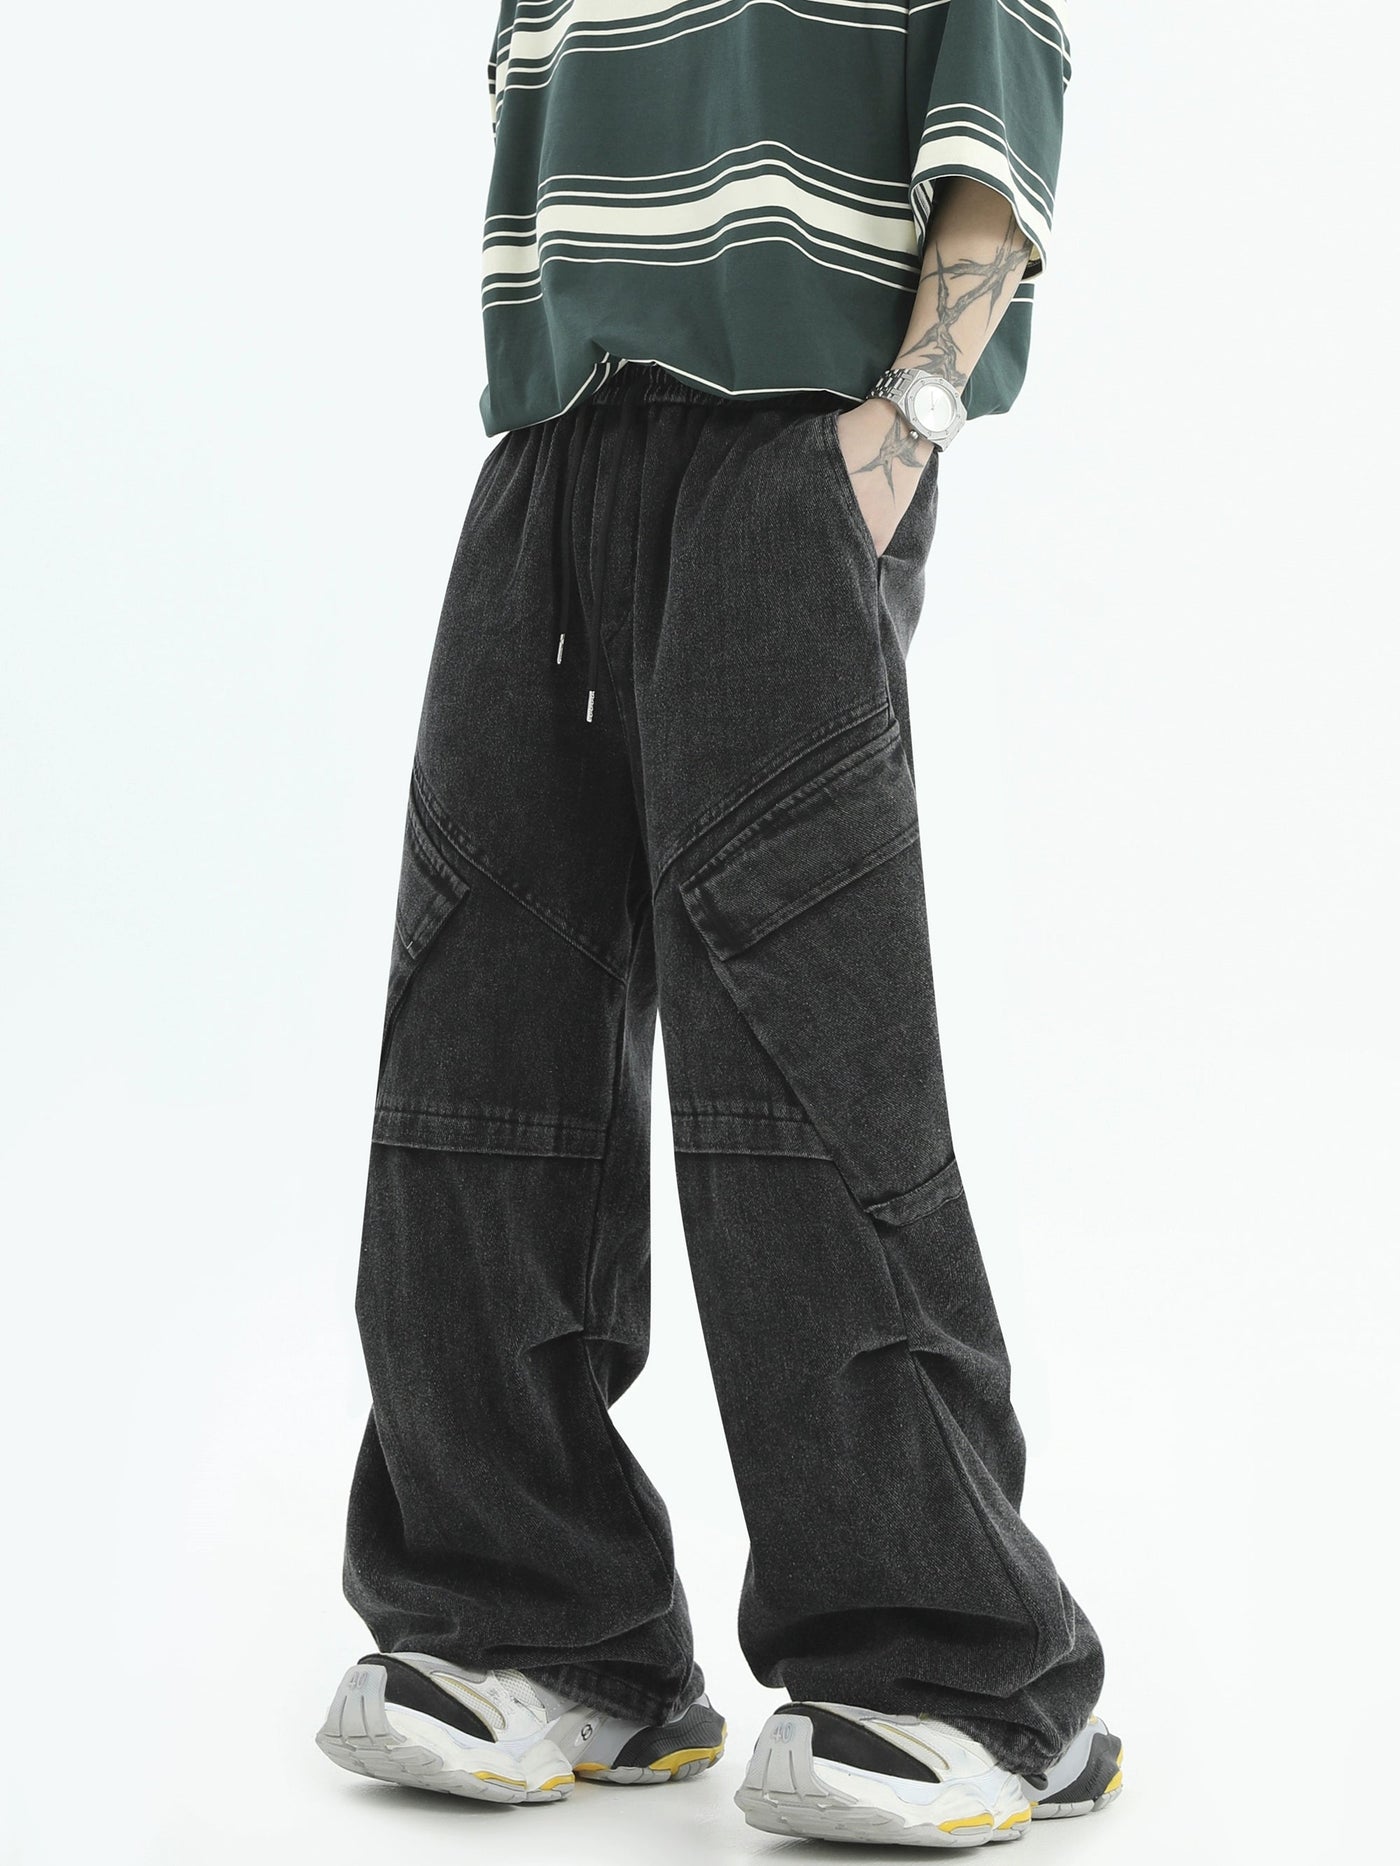 Side Flap Pocket Jeans Korean Street Fashion Jeans By INS Korea Shop Online at OH Vault